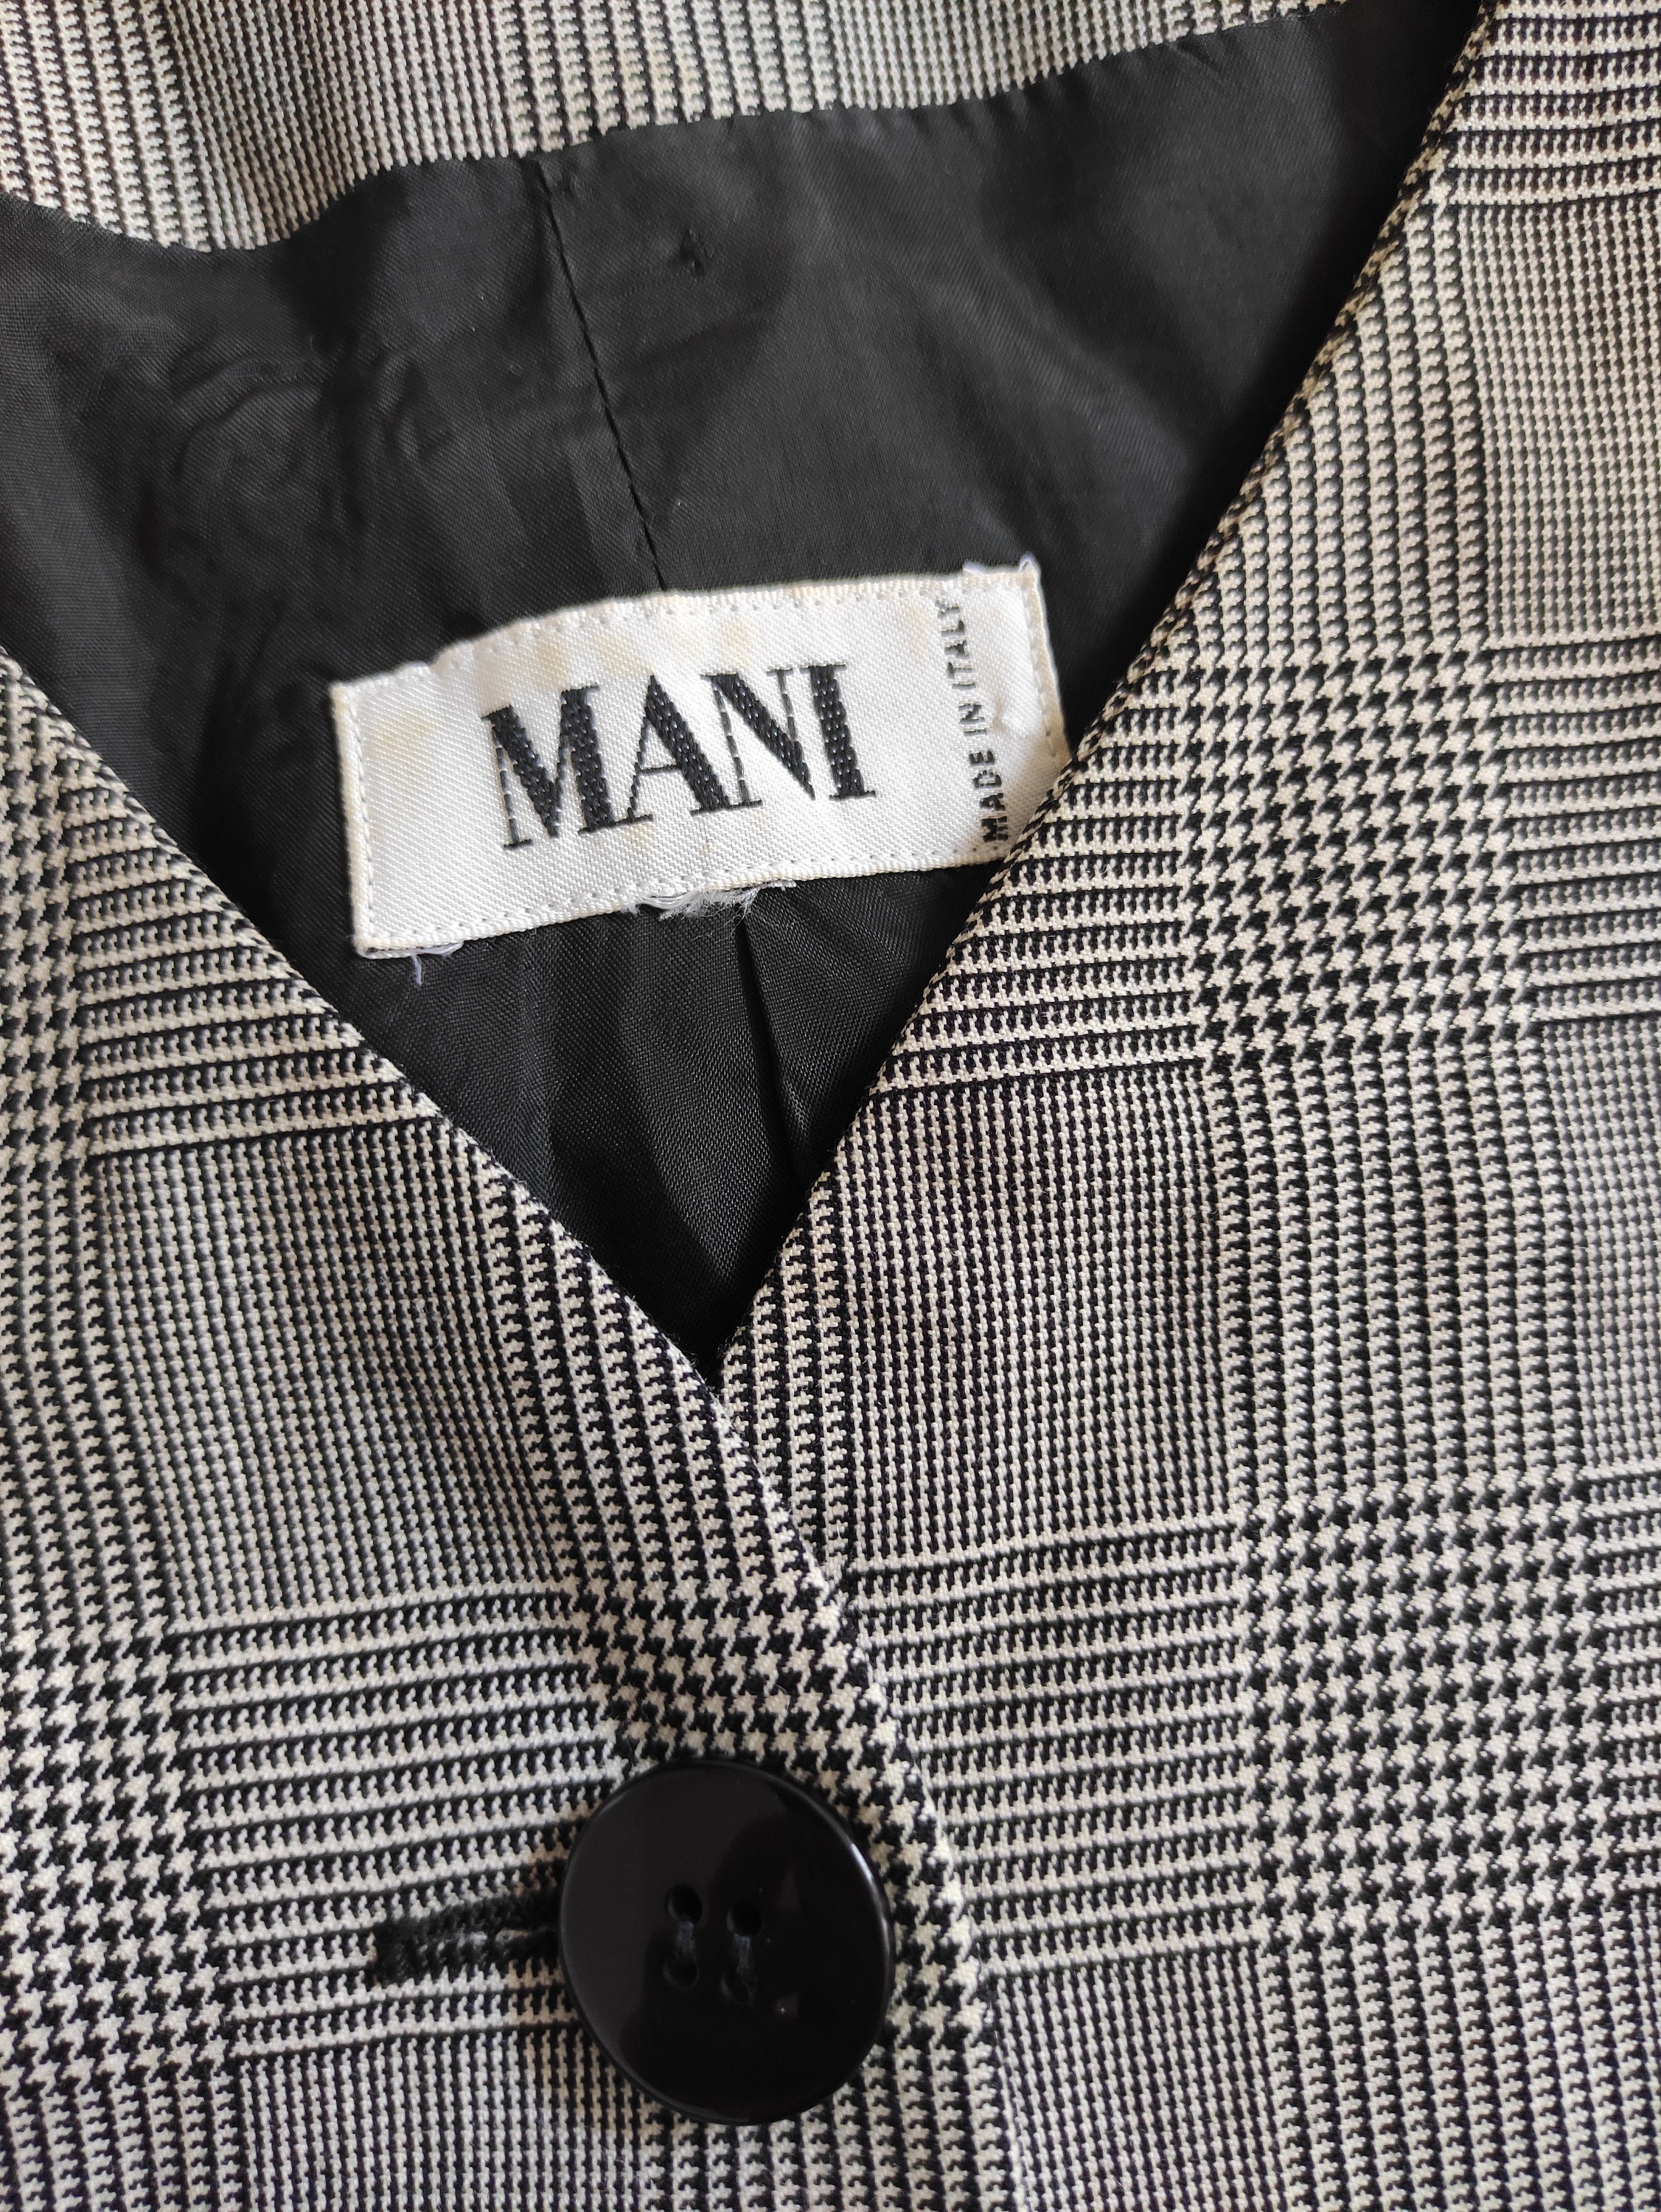 MANI by Giorgio Armani Vintage Short B&W Jacket 1980's - Etsy